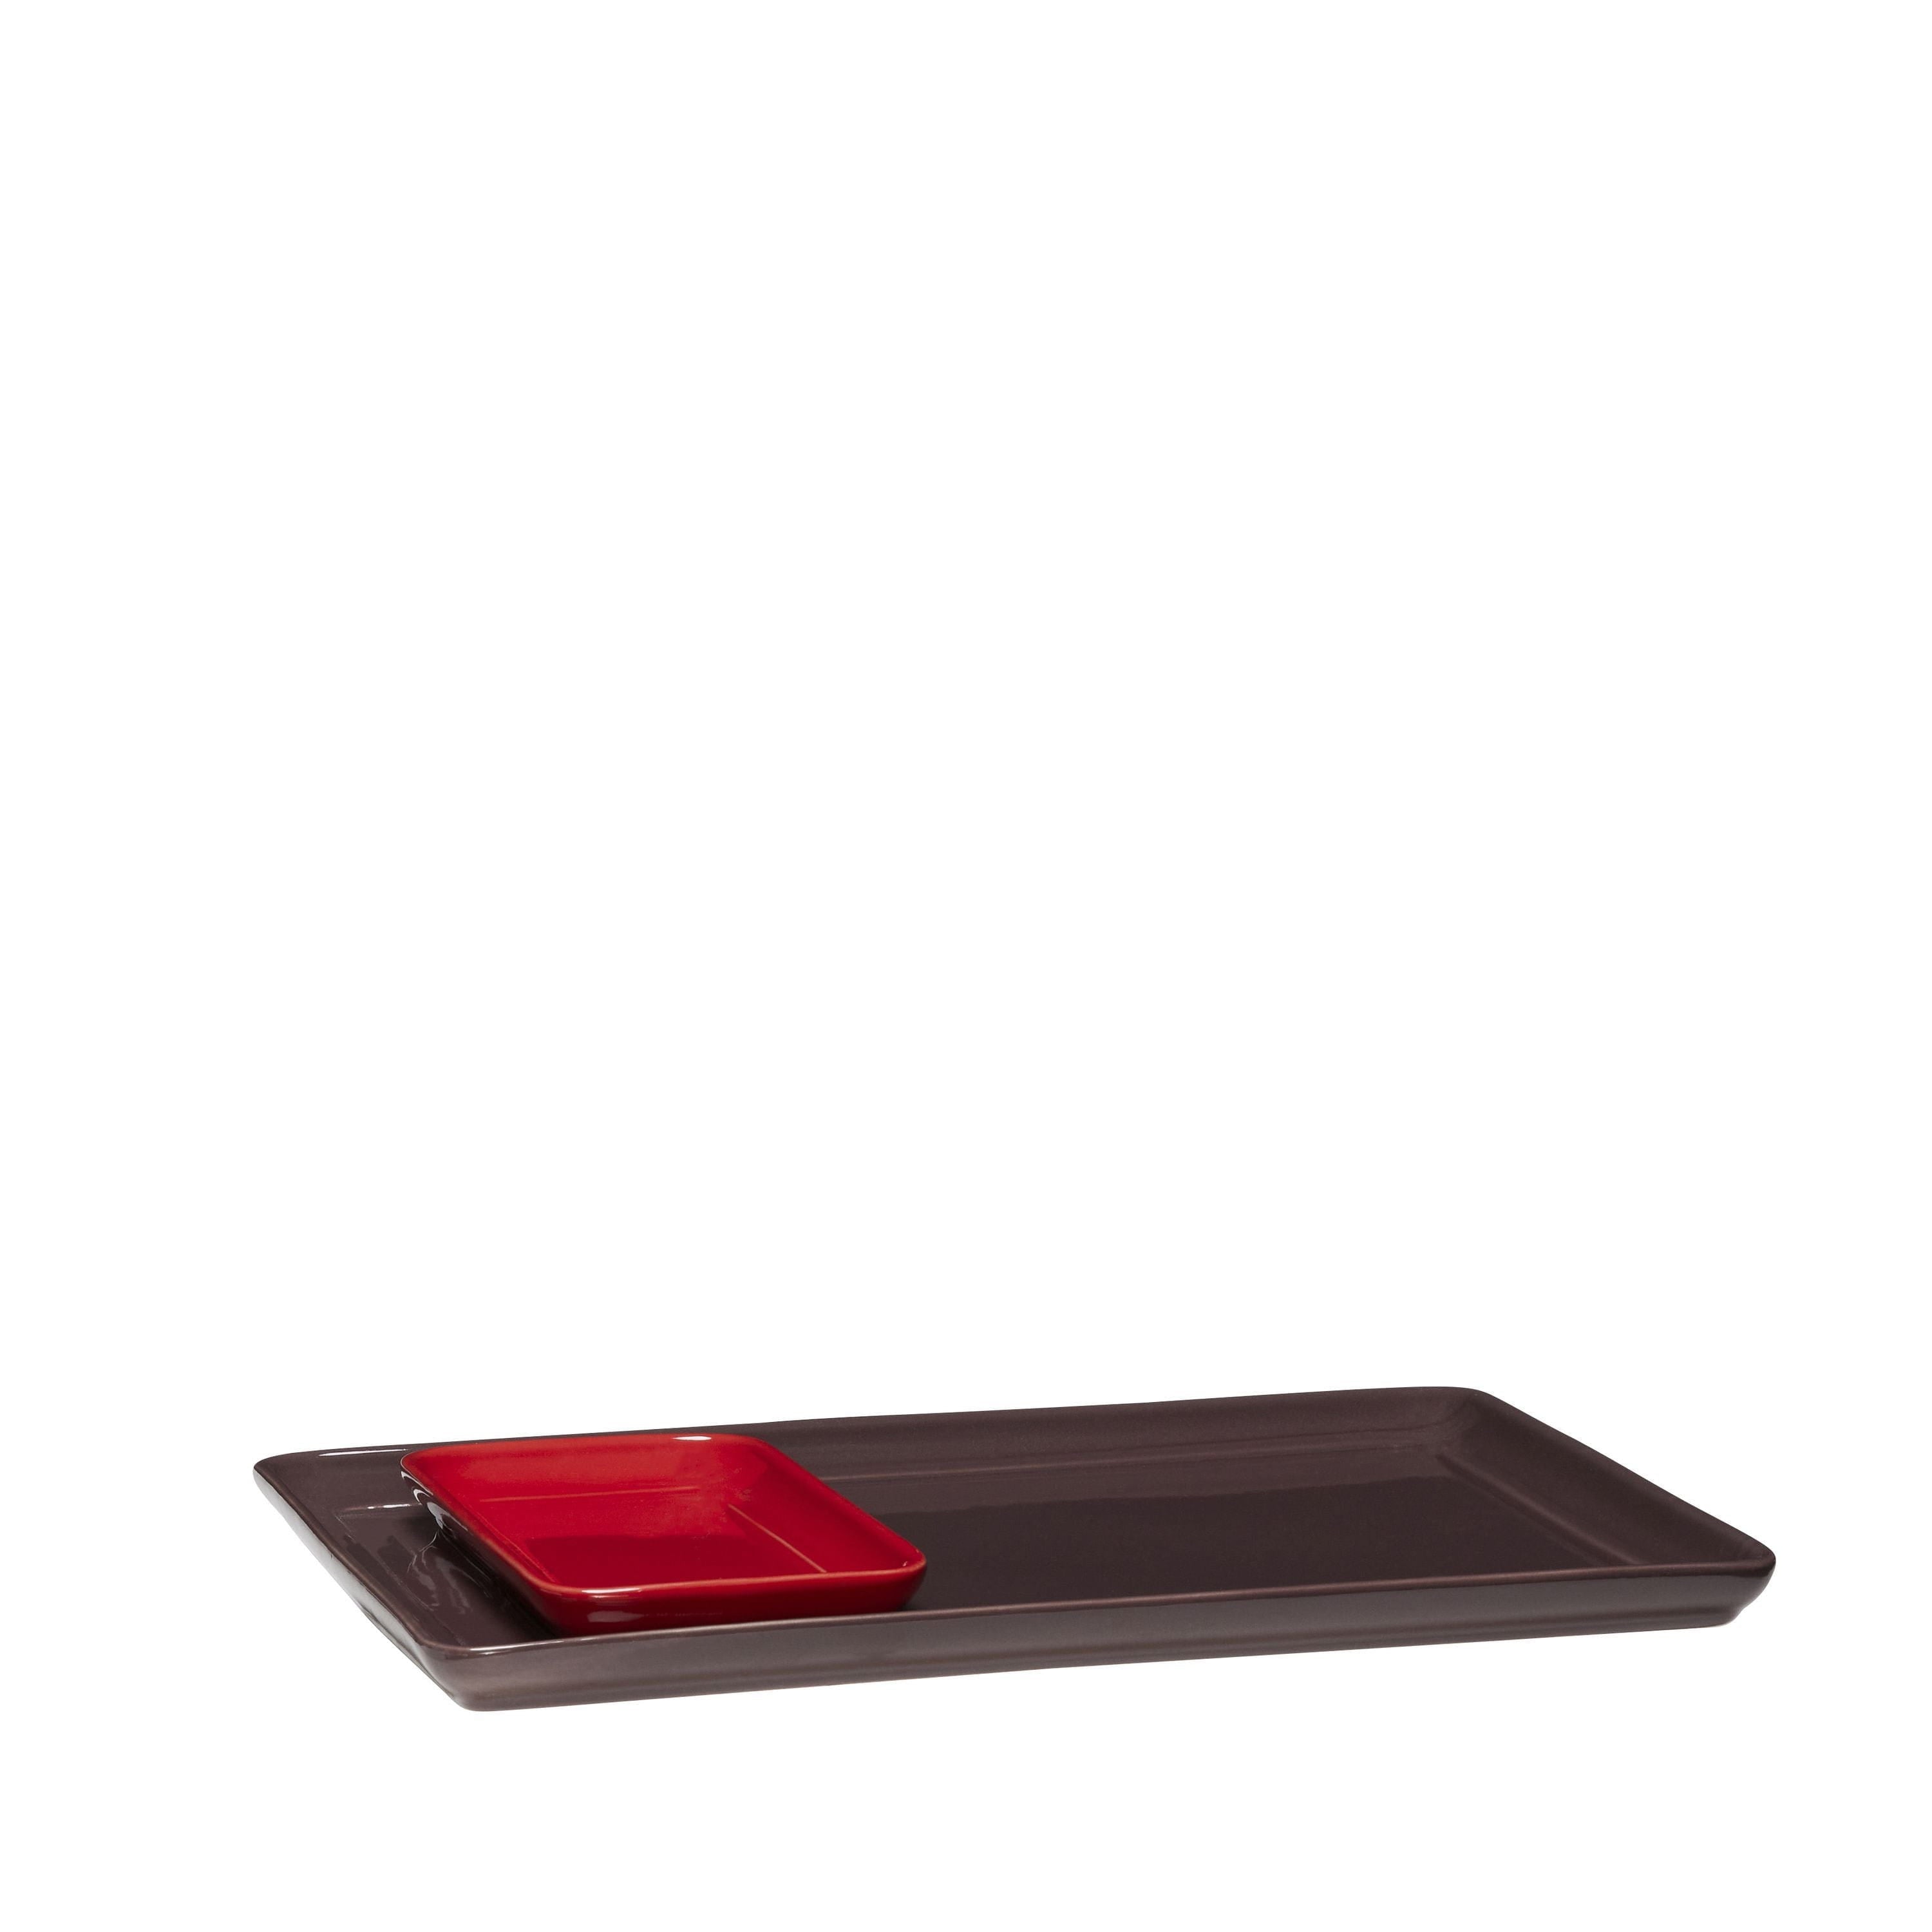 Hübsch Amare Tablett Set of 2, Bourgogne/Red